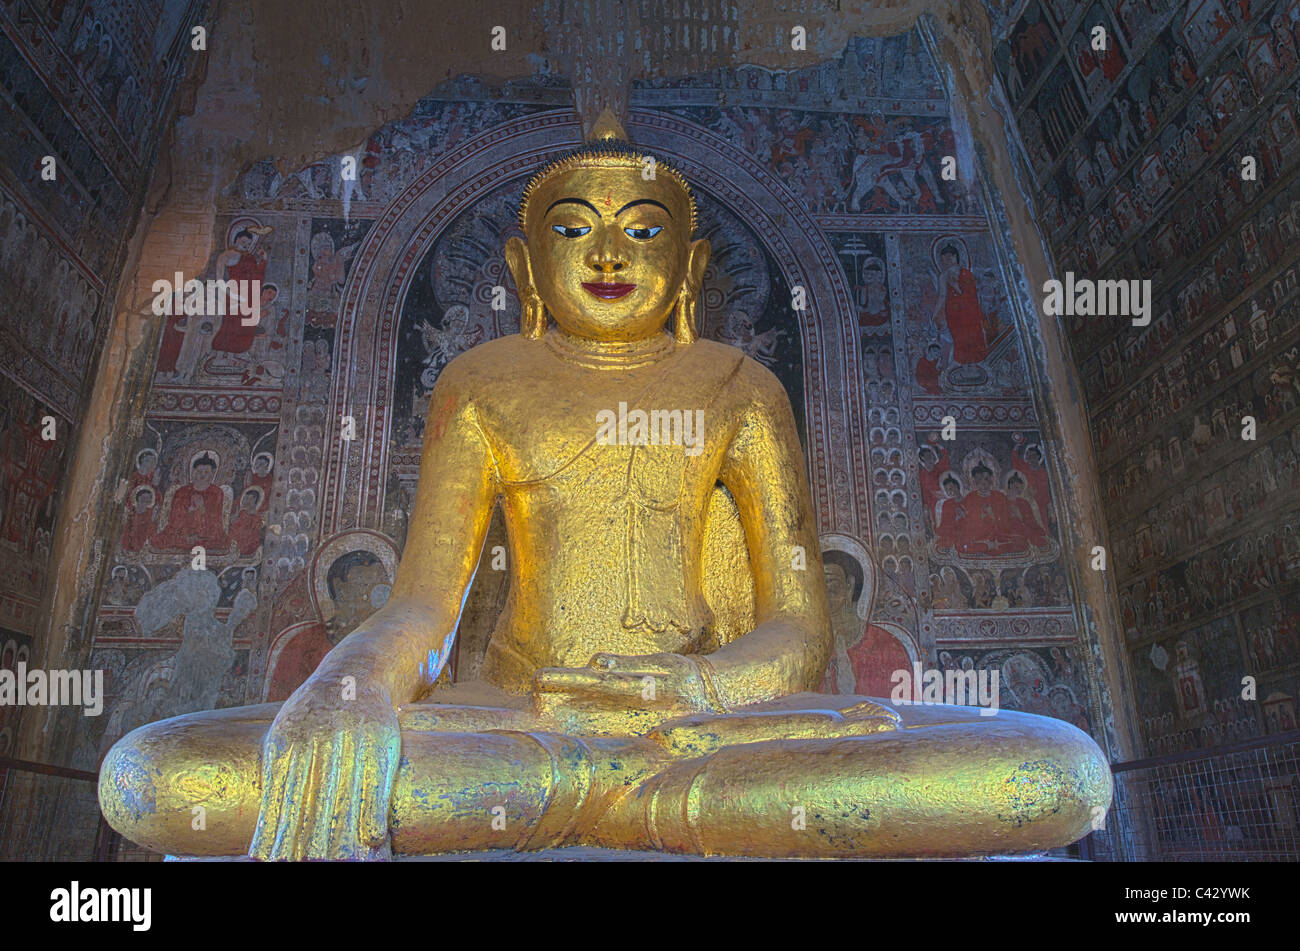 Goldene Statue des Buddha in einem Tempel von Bagan - Bagan, Myanmar, Burma Stockfoto